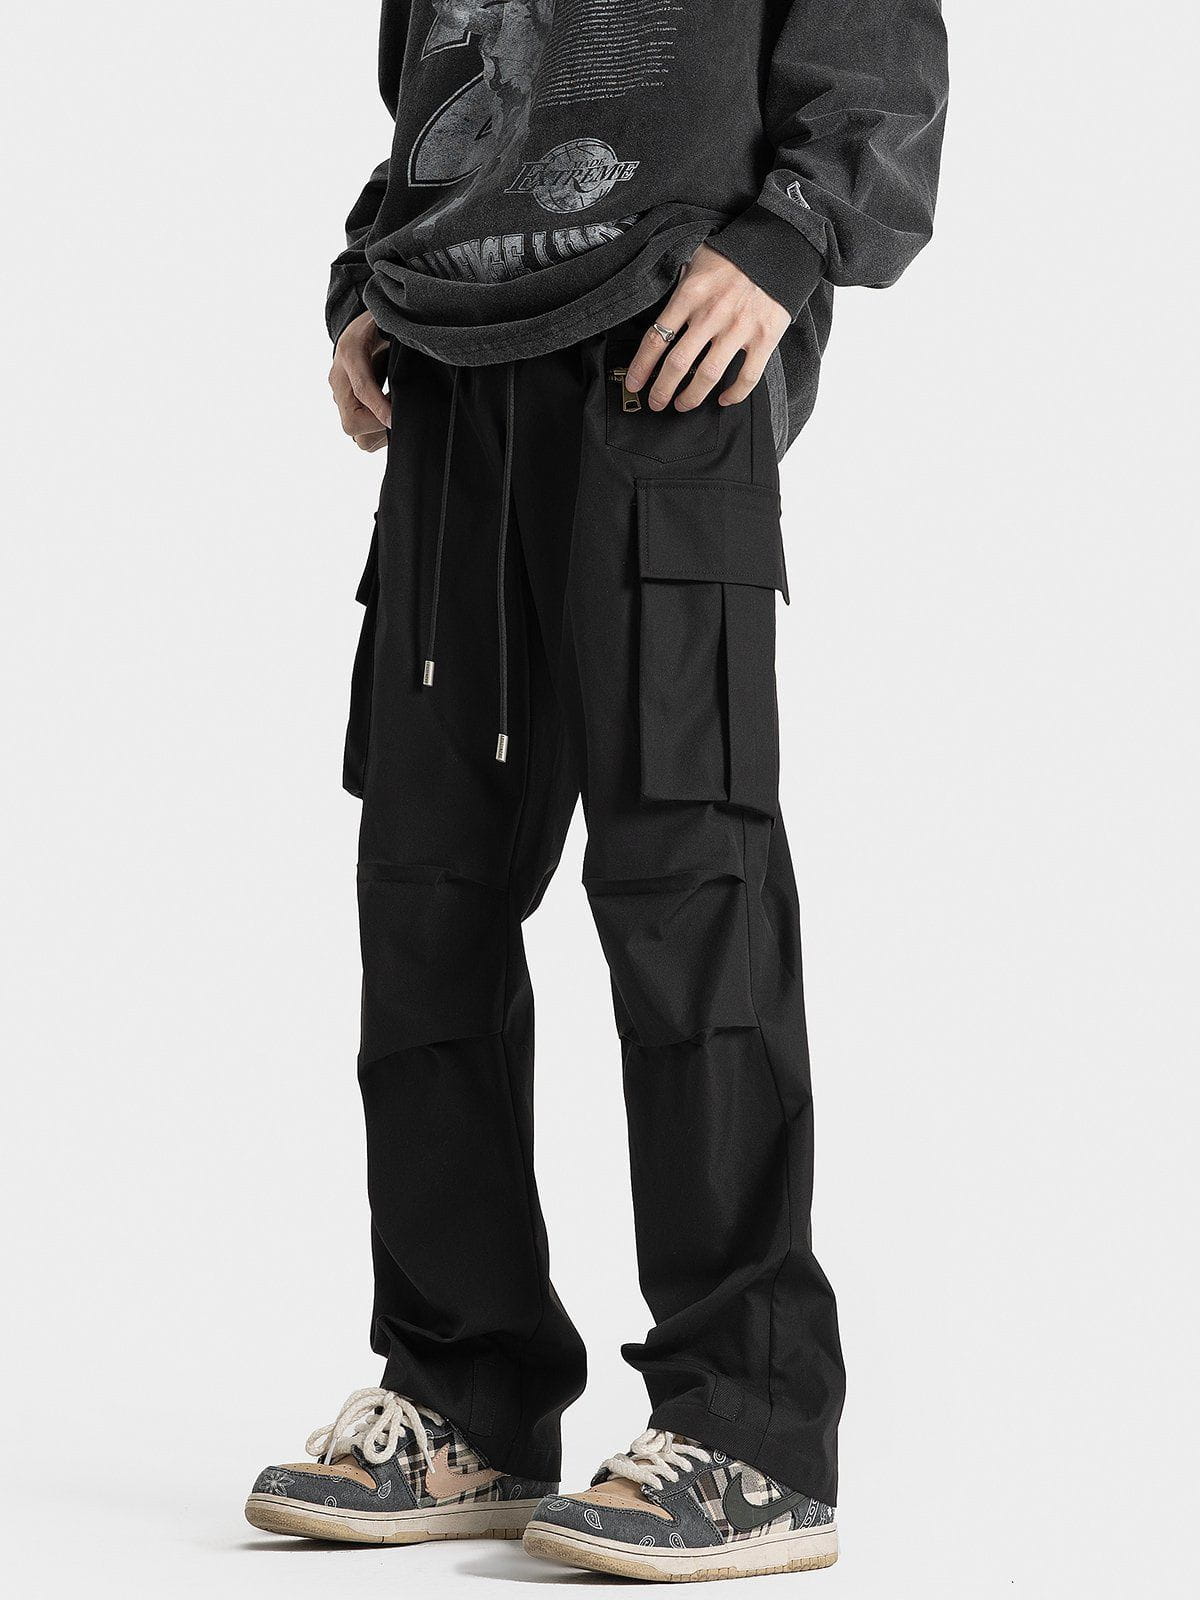 Majesda® - Zip Large Multi-Pocket Cargo Pants outfit ideas streetwear fashion